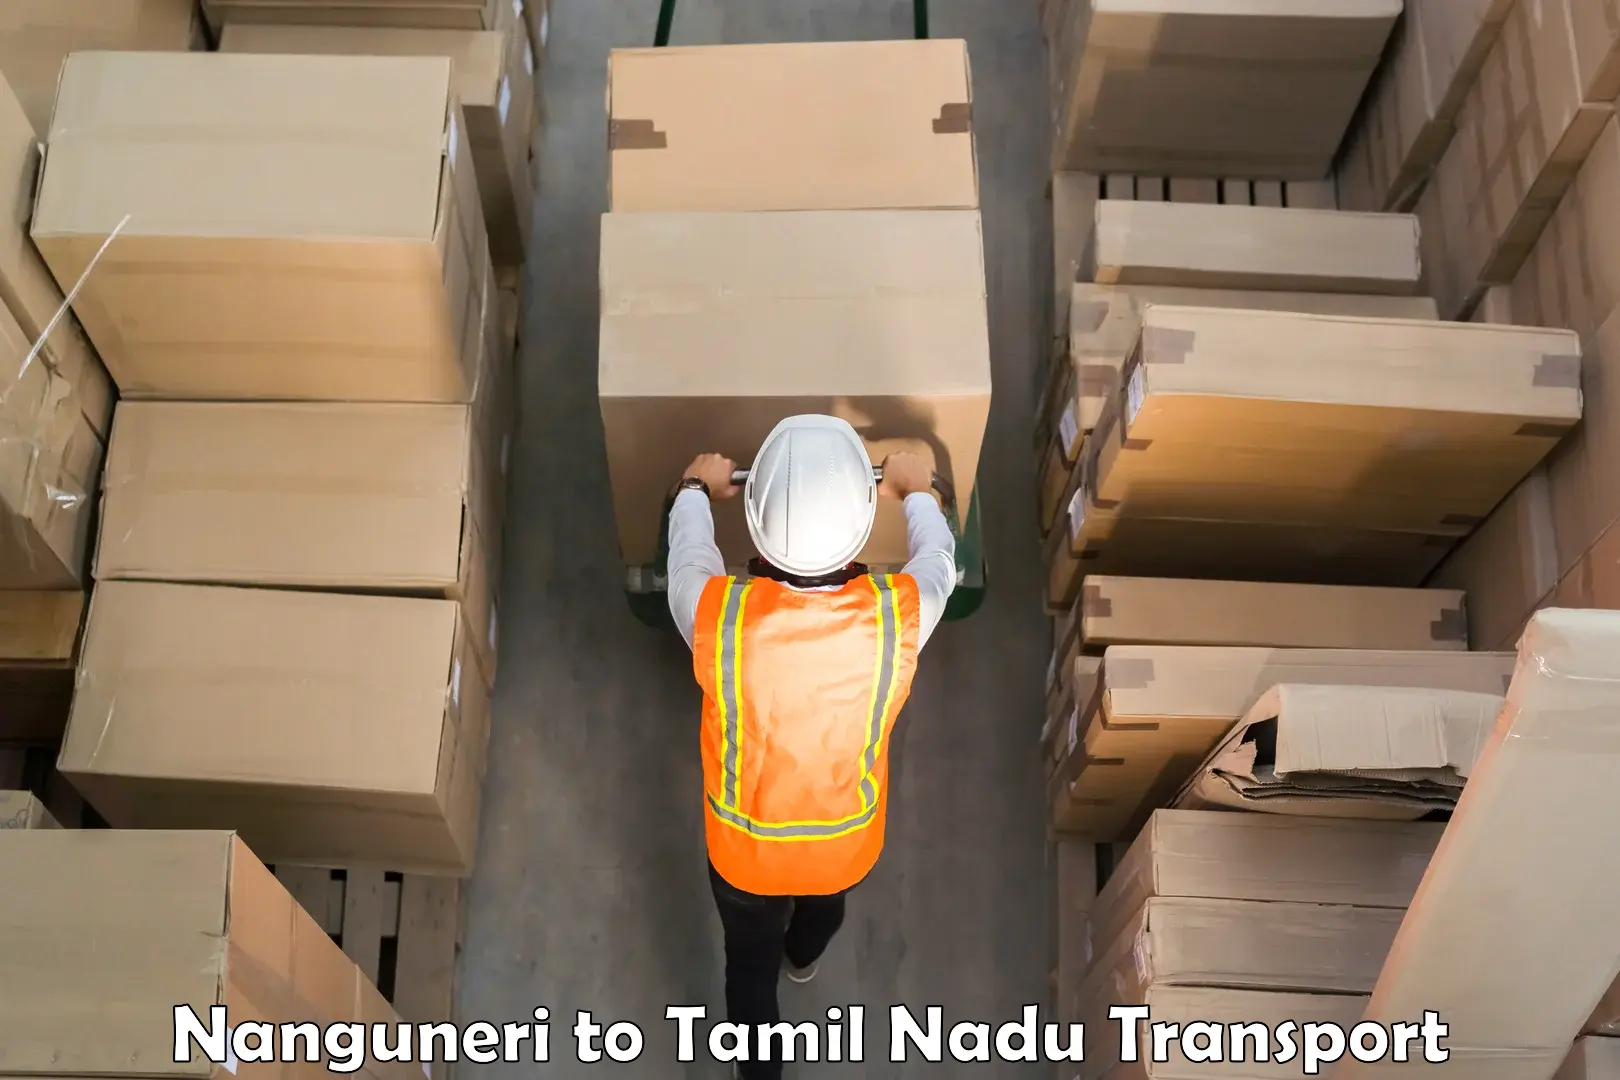 Nearby transport service Nanguneri to Thiruvadanai